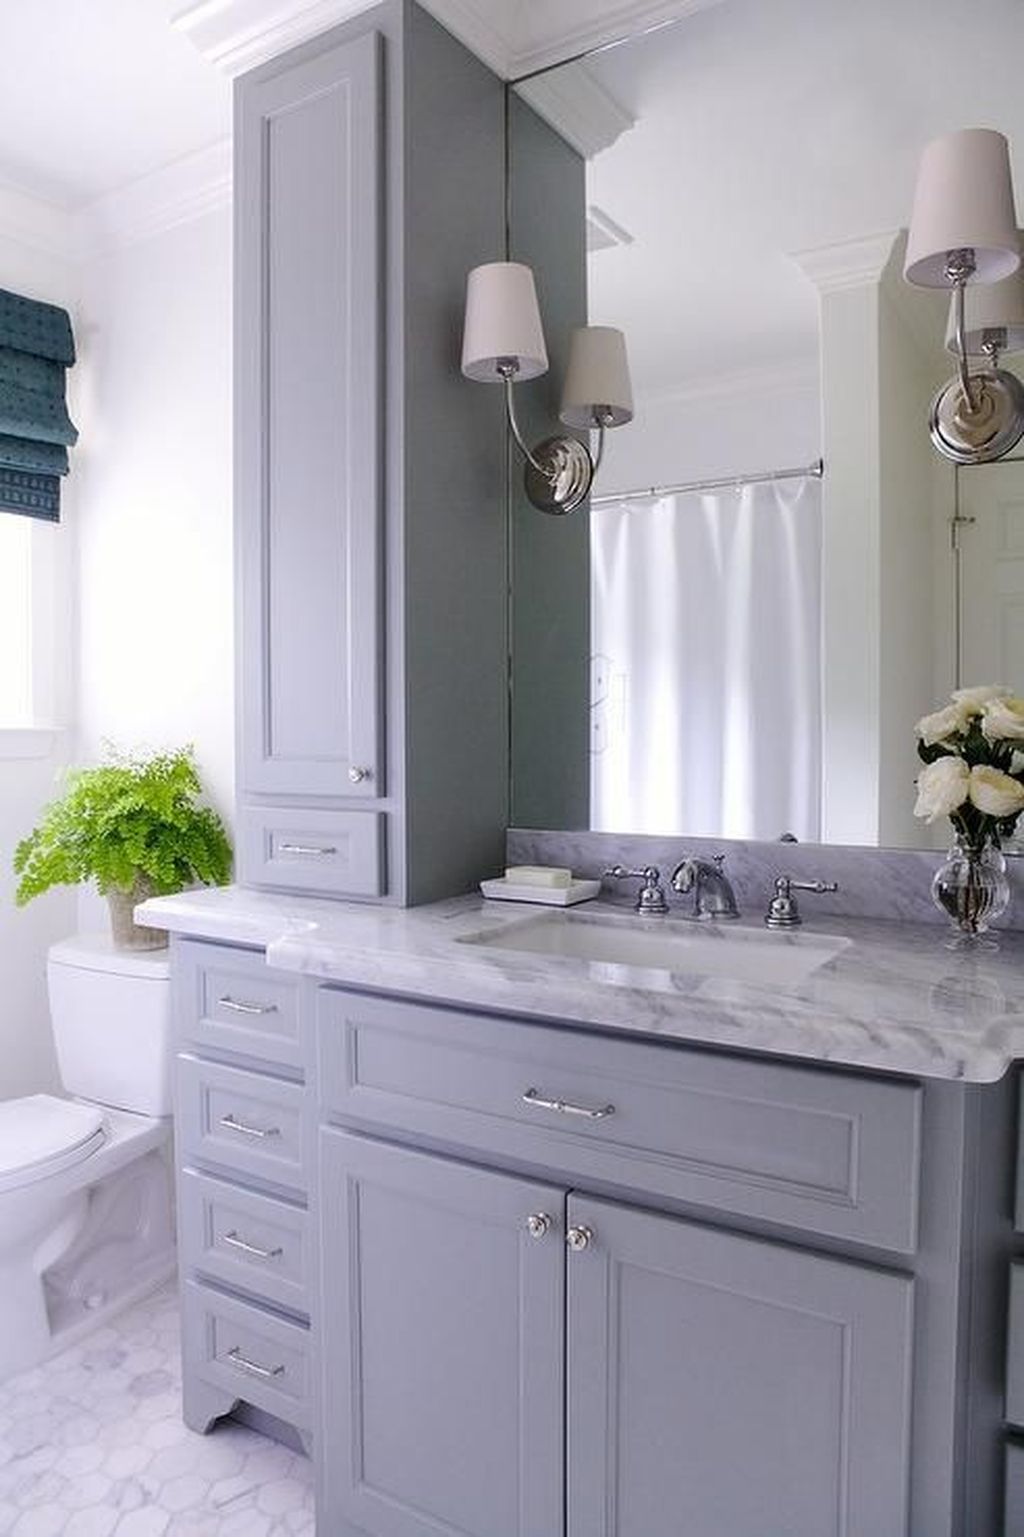 20+ Inspiring Bathroom Vanity Design Ideas